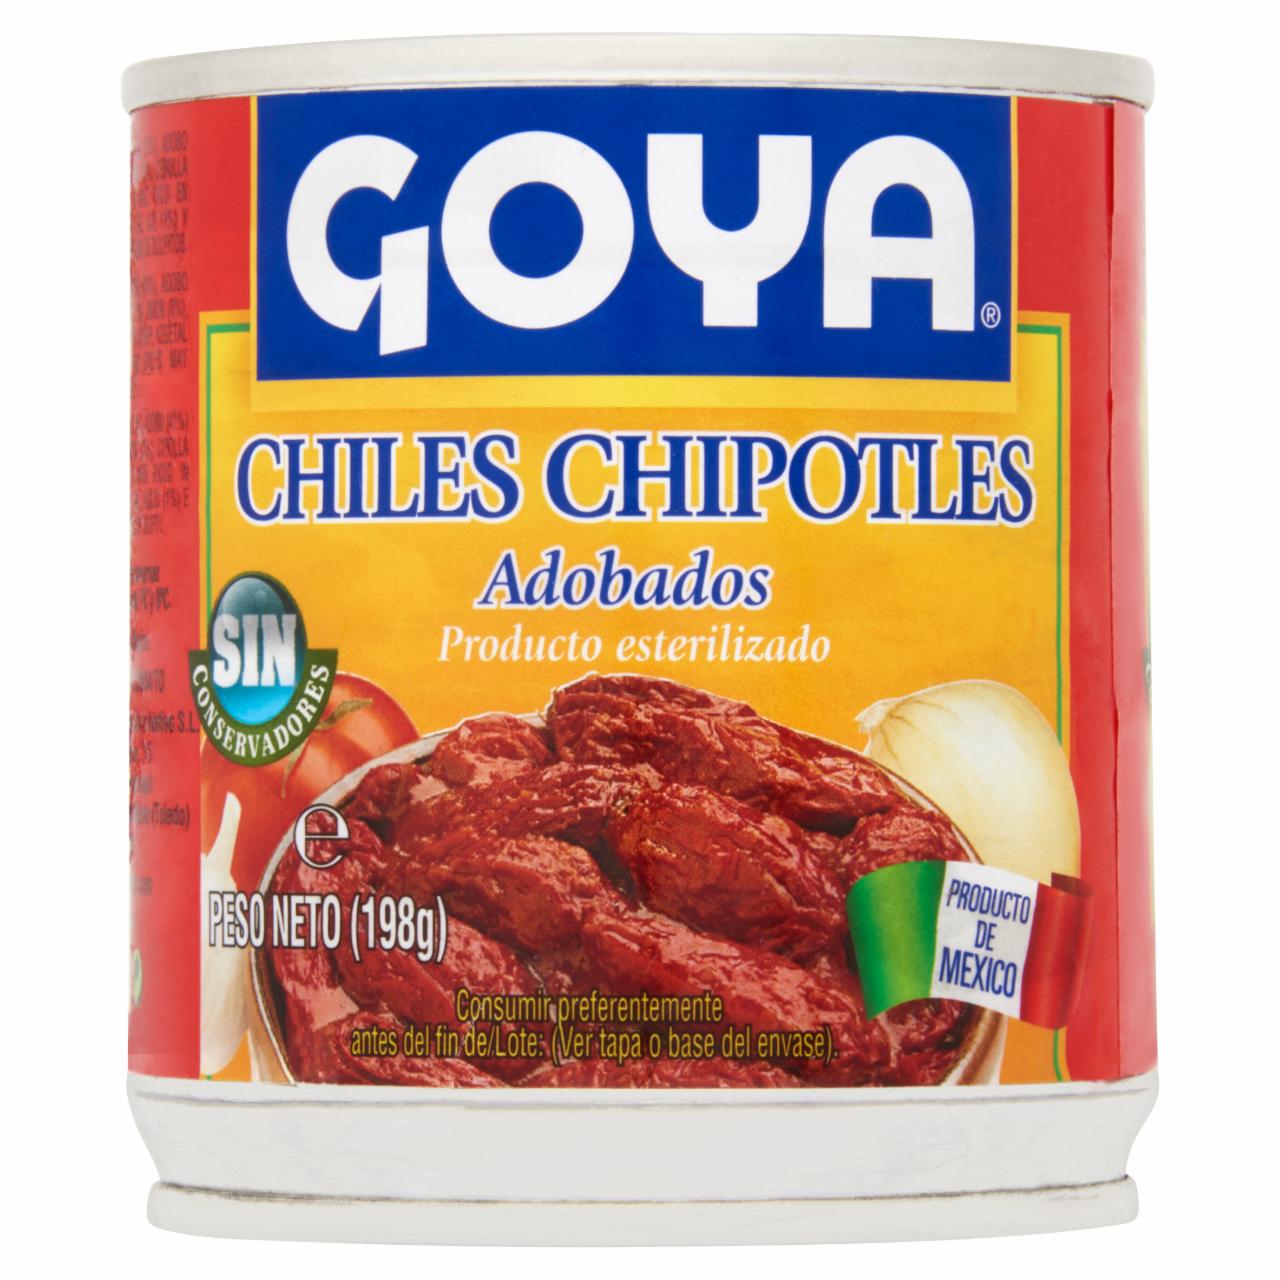 Képek - Goya chipotle chili paprika páclében 198 g